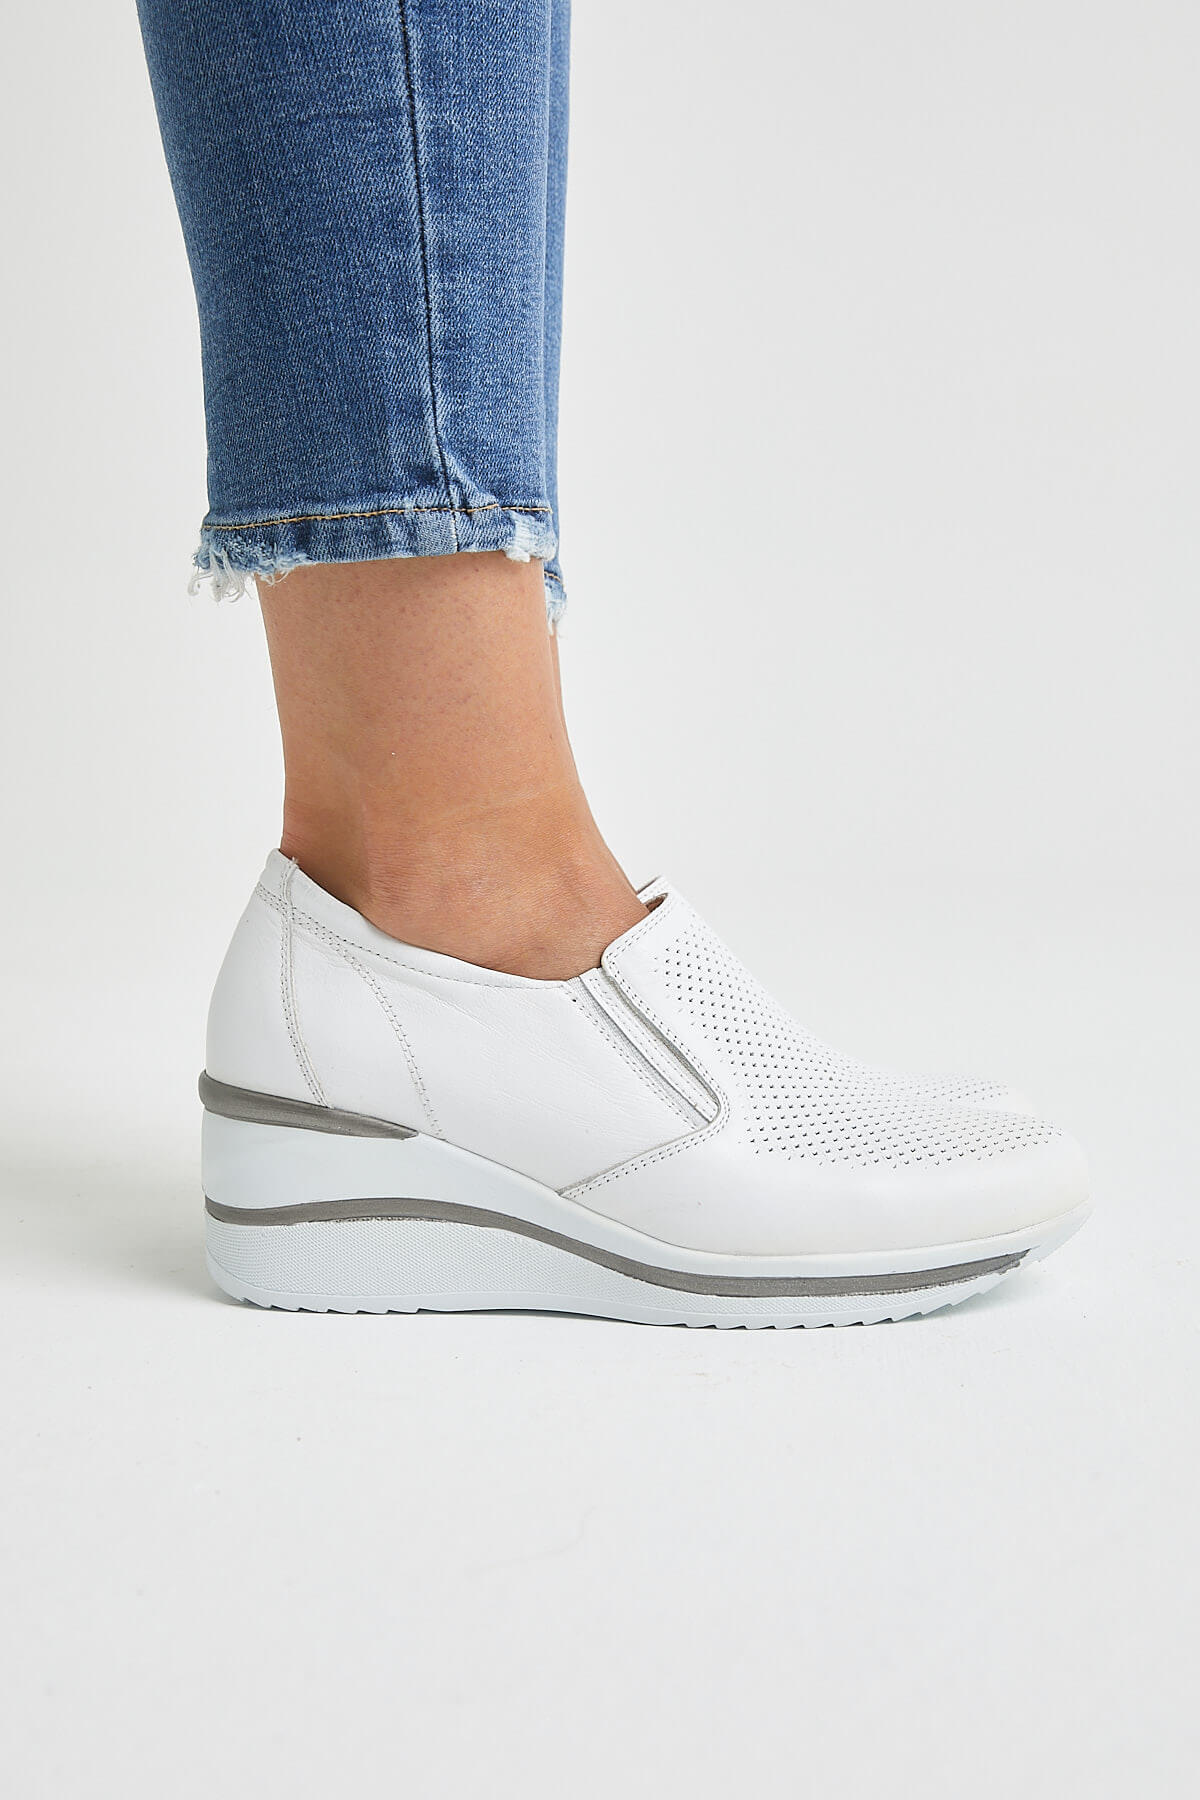 Kadın Dolgu Topuk Deri Sneakers Beyaz 2111501Y - Thumbnail